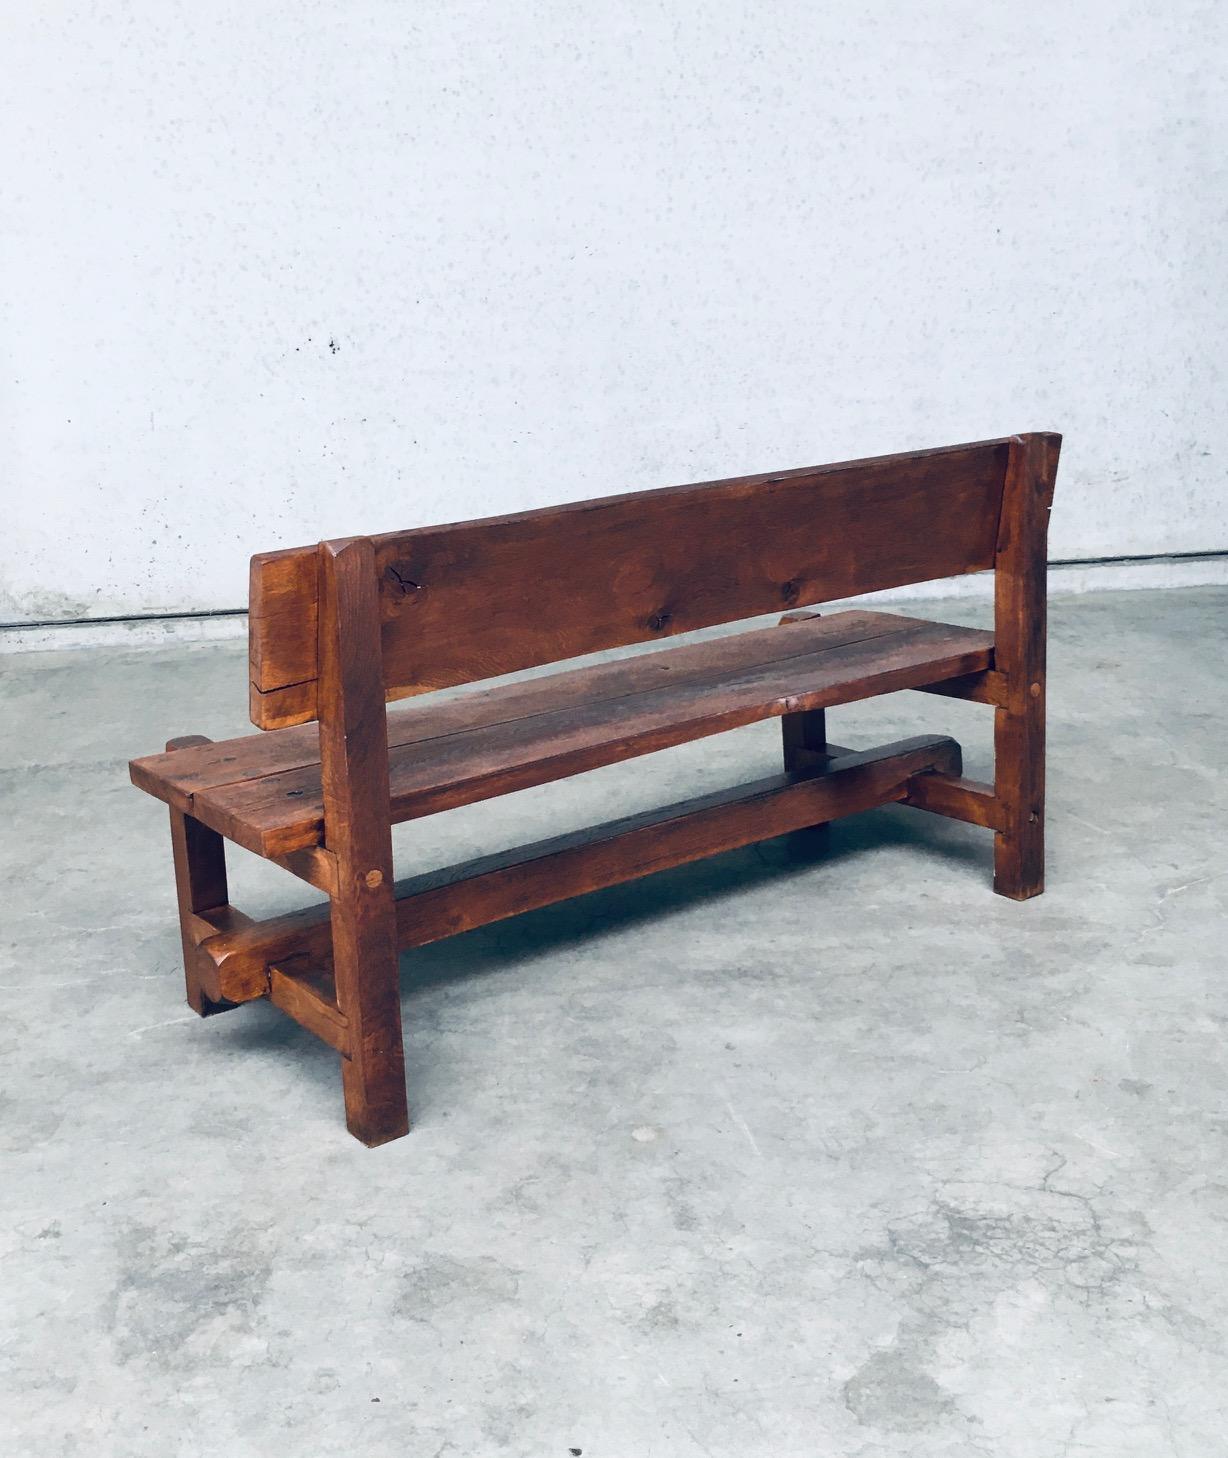 Brutalist Design Hand Crafted Solid Oak Bench, Belgium 1960's For Sale 6